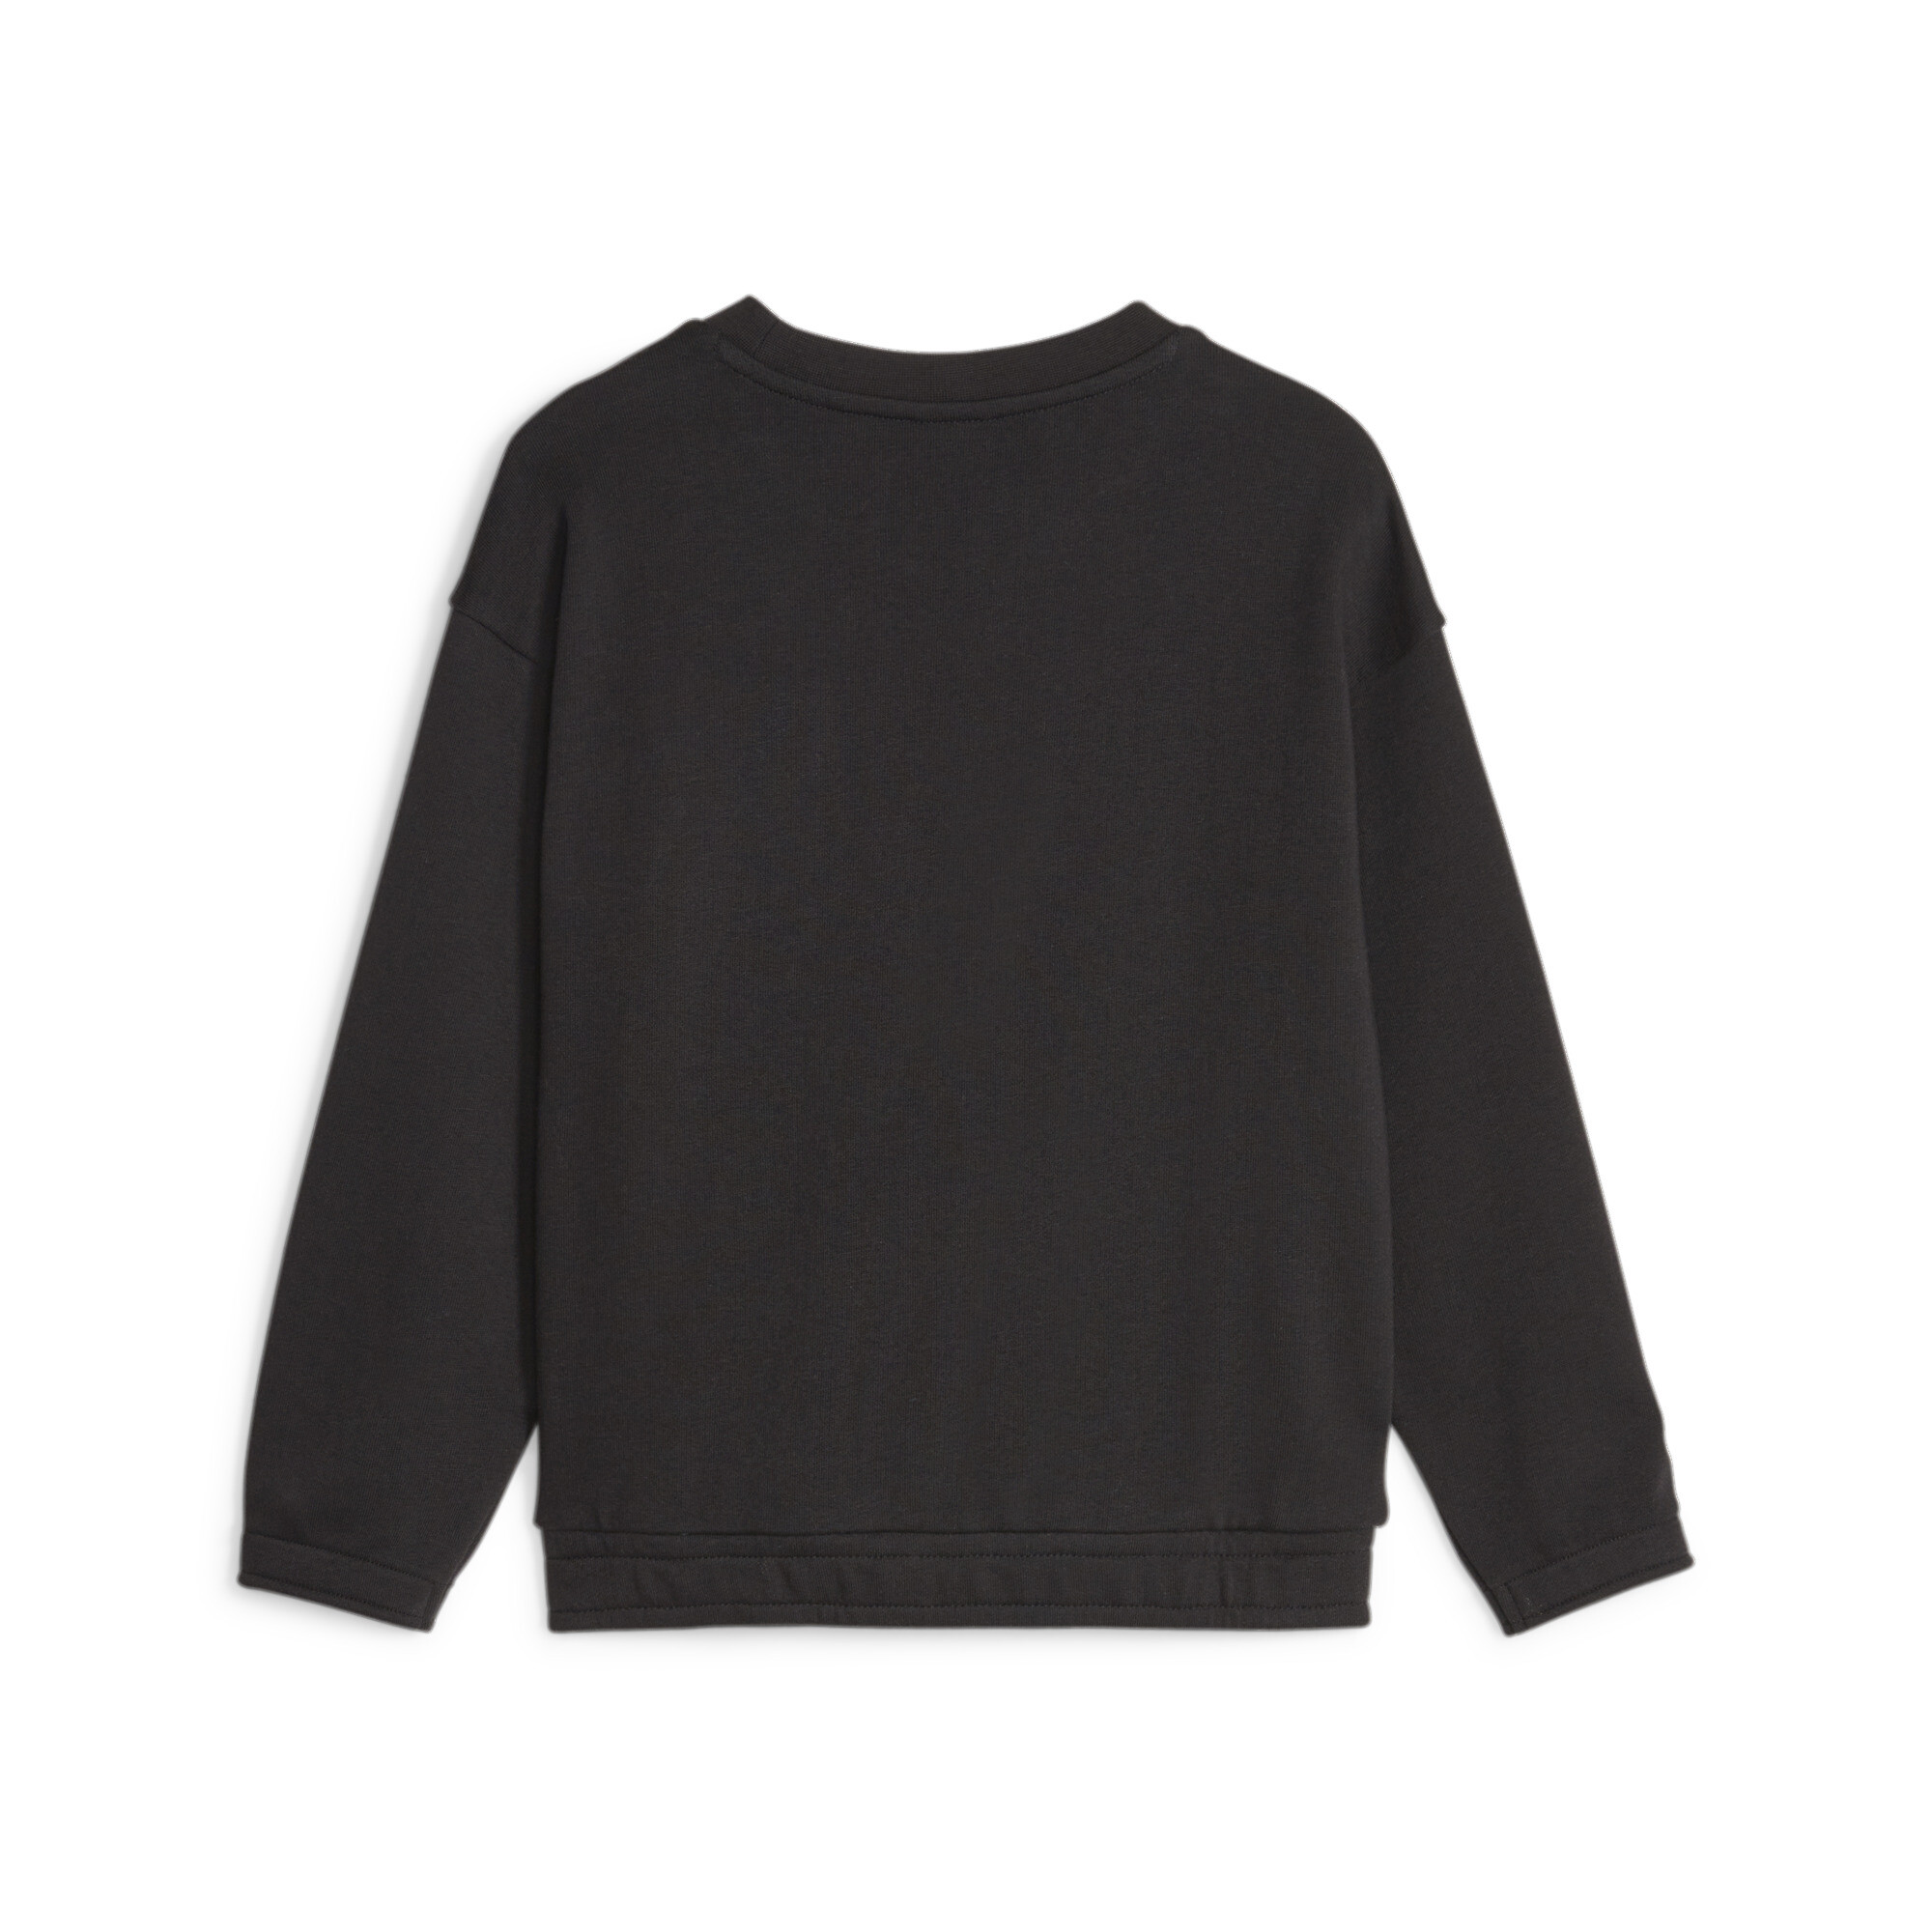 PUMA Classics Mix Match Sweatshirt In Black, Size 5-6 Youth